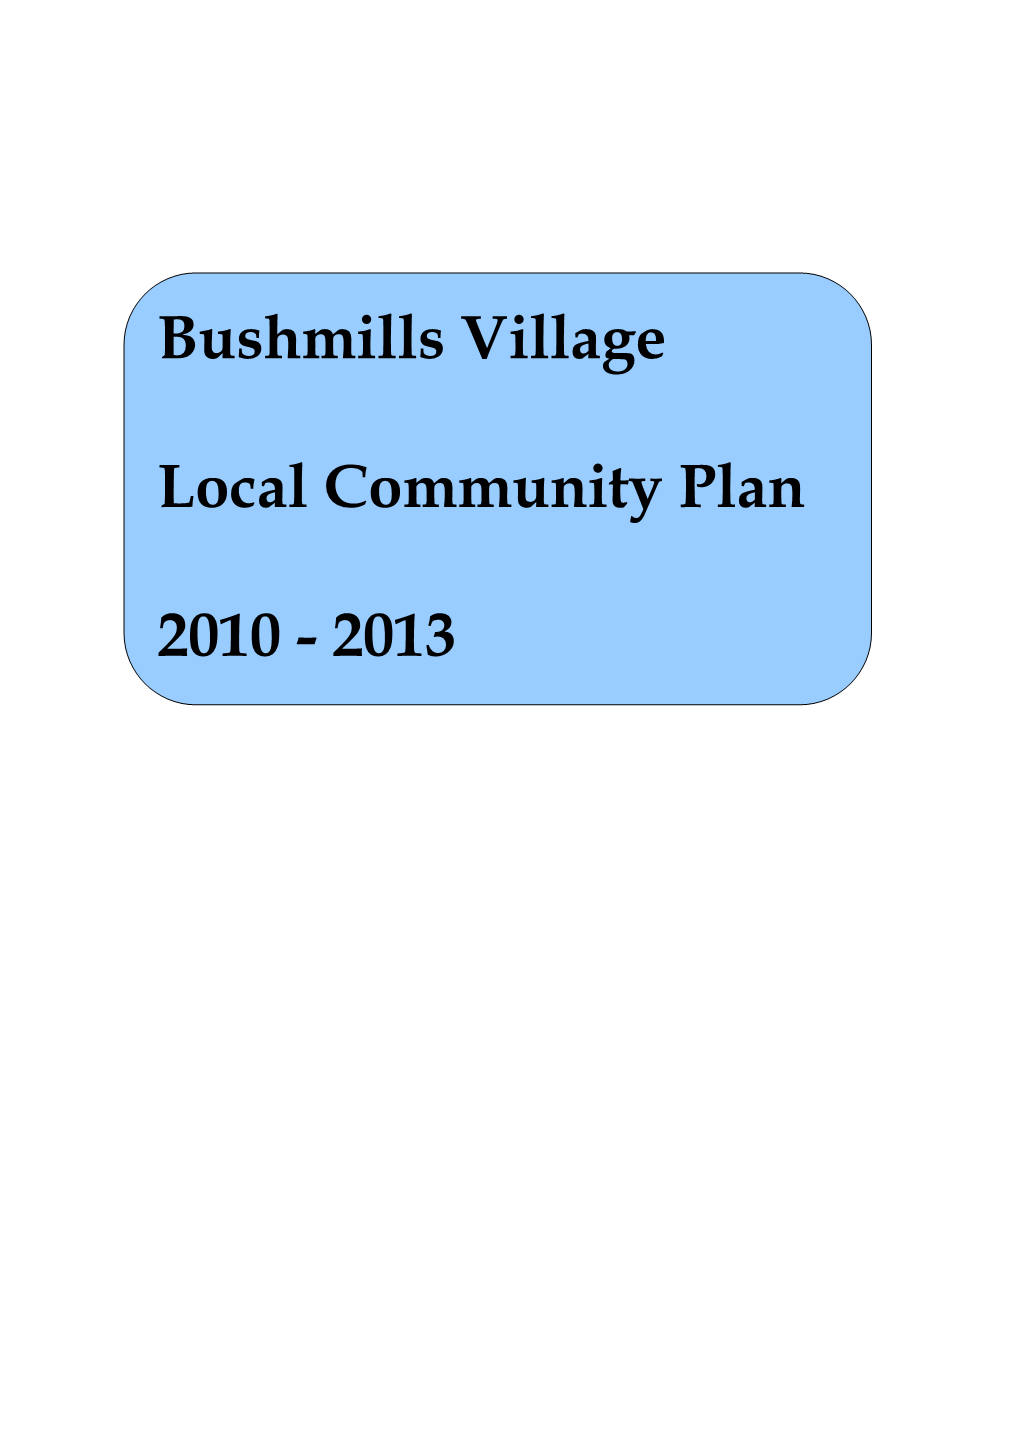 Bushmills Community Plan: Key Areas of Work